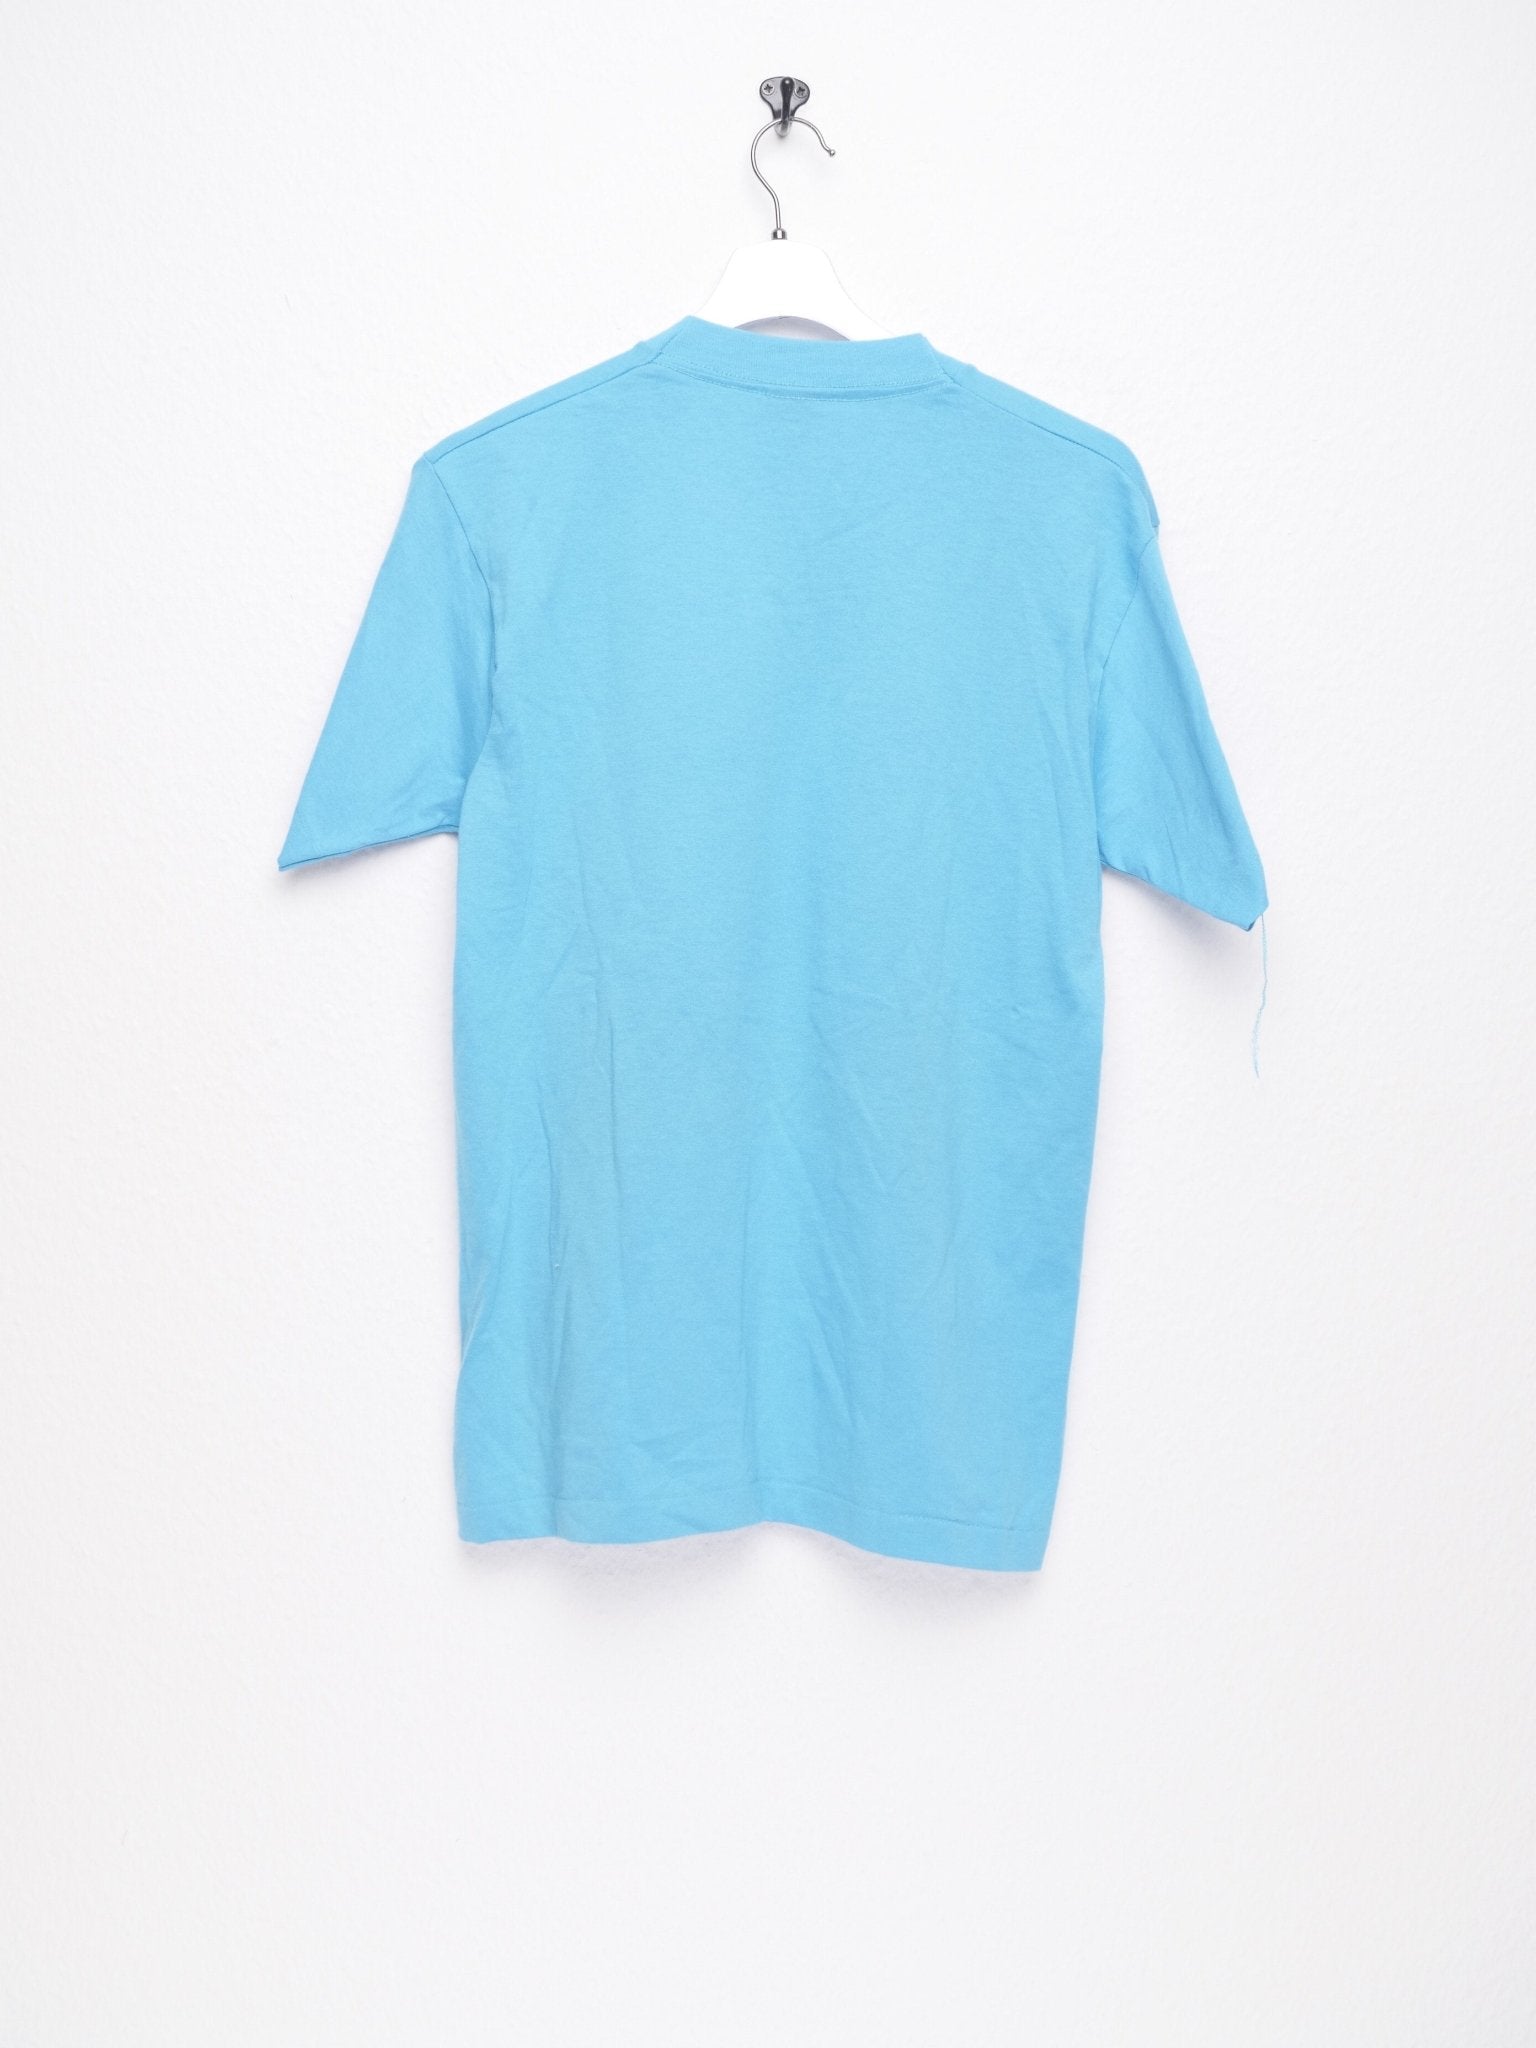 'Las Vegas' printed Graphic blue Shirt - Peeces